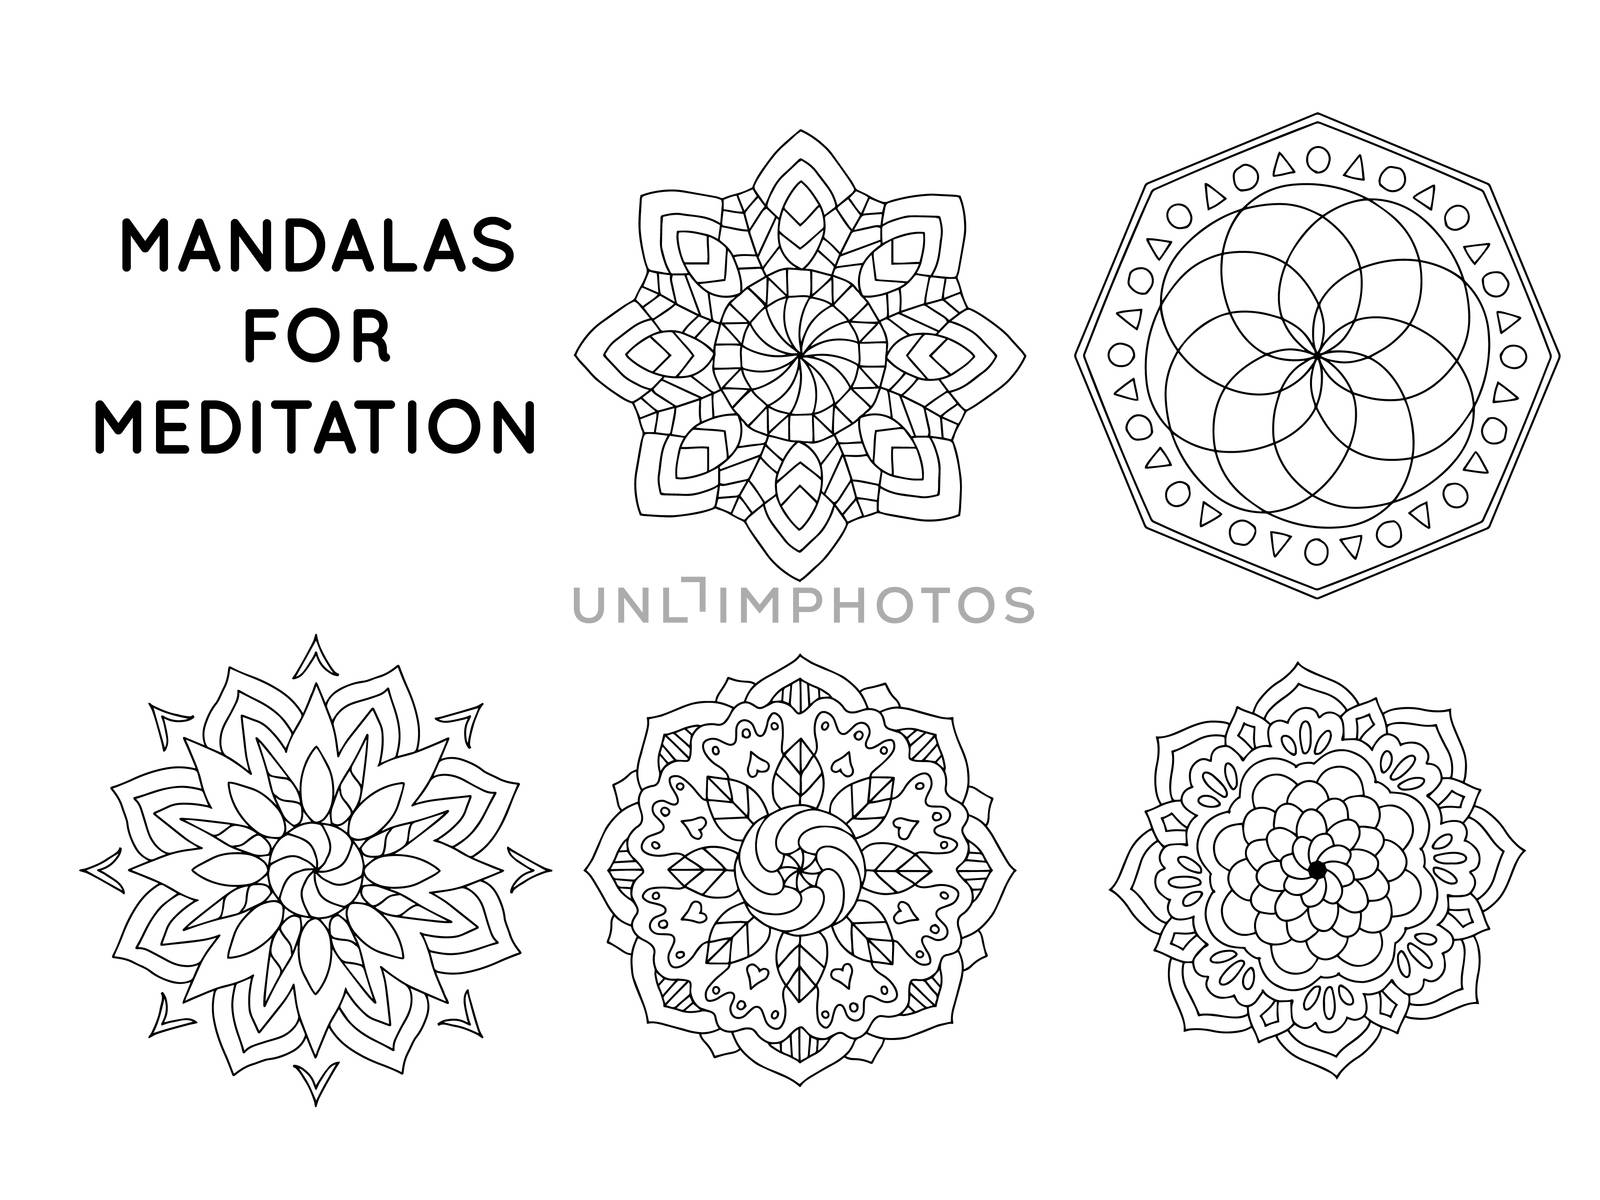 Flower mandala outline patterns for coloring books